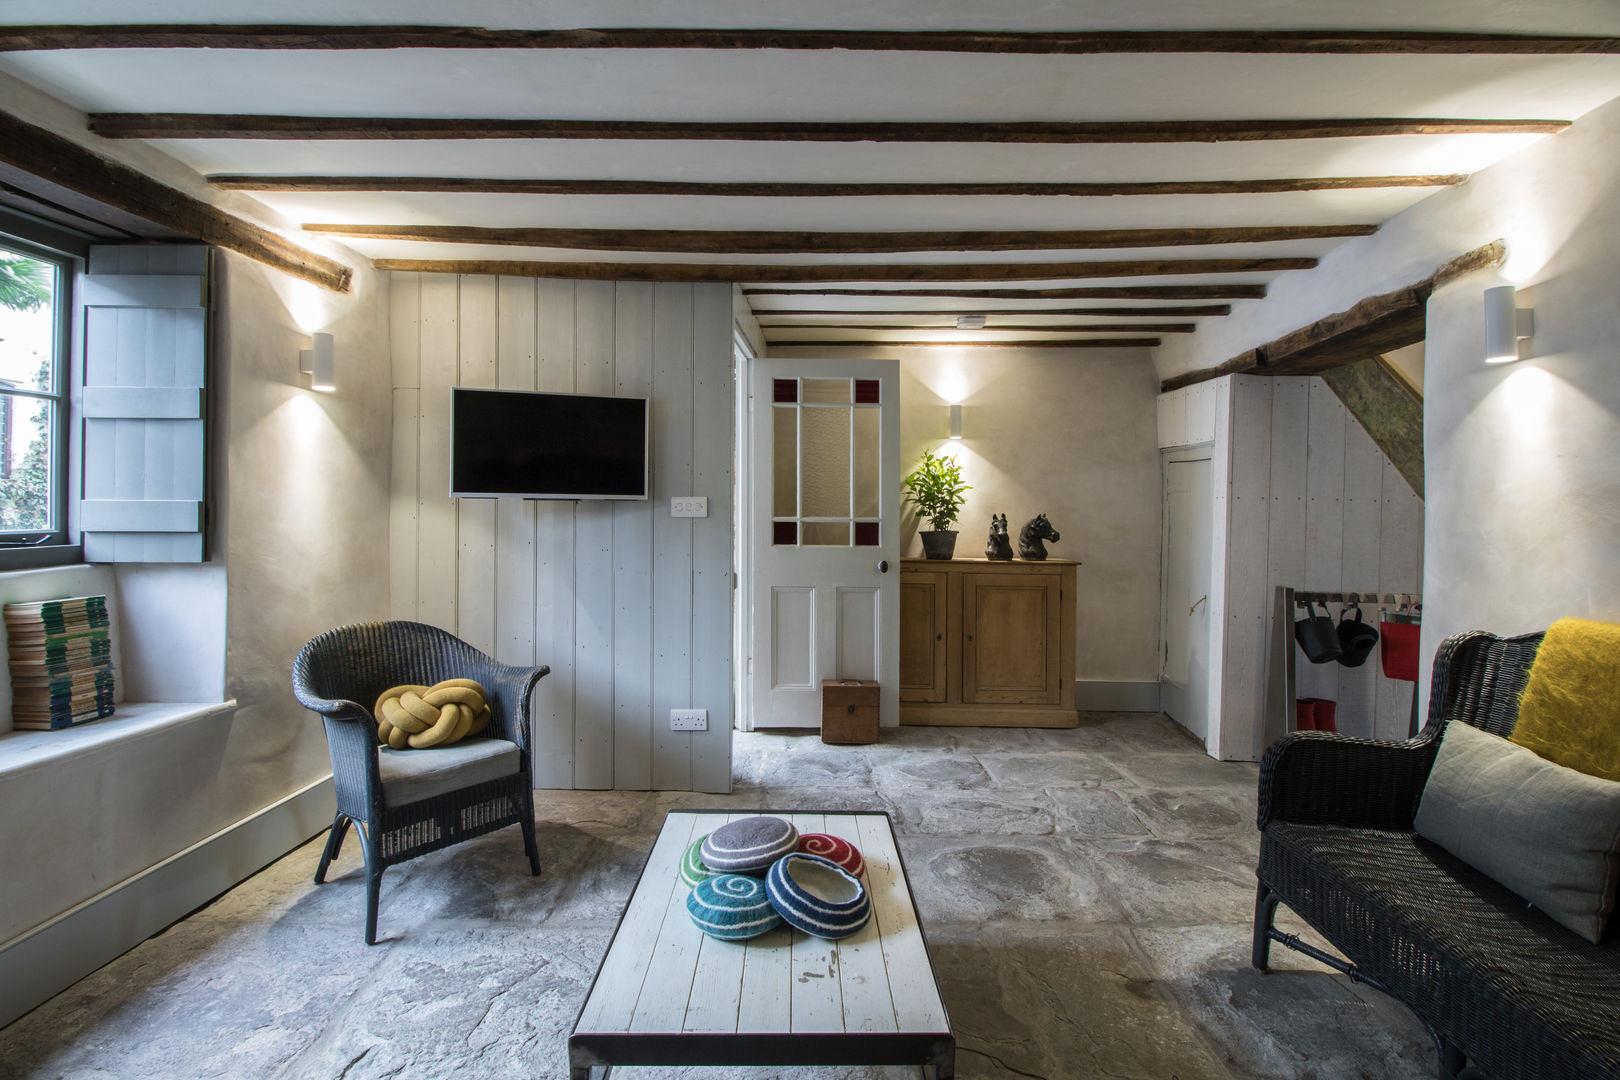 Miner's Cottage II: Living Room design storey Rustykalny salon shabby chic,living room,living room